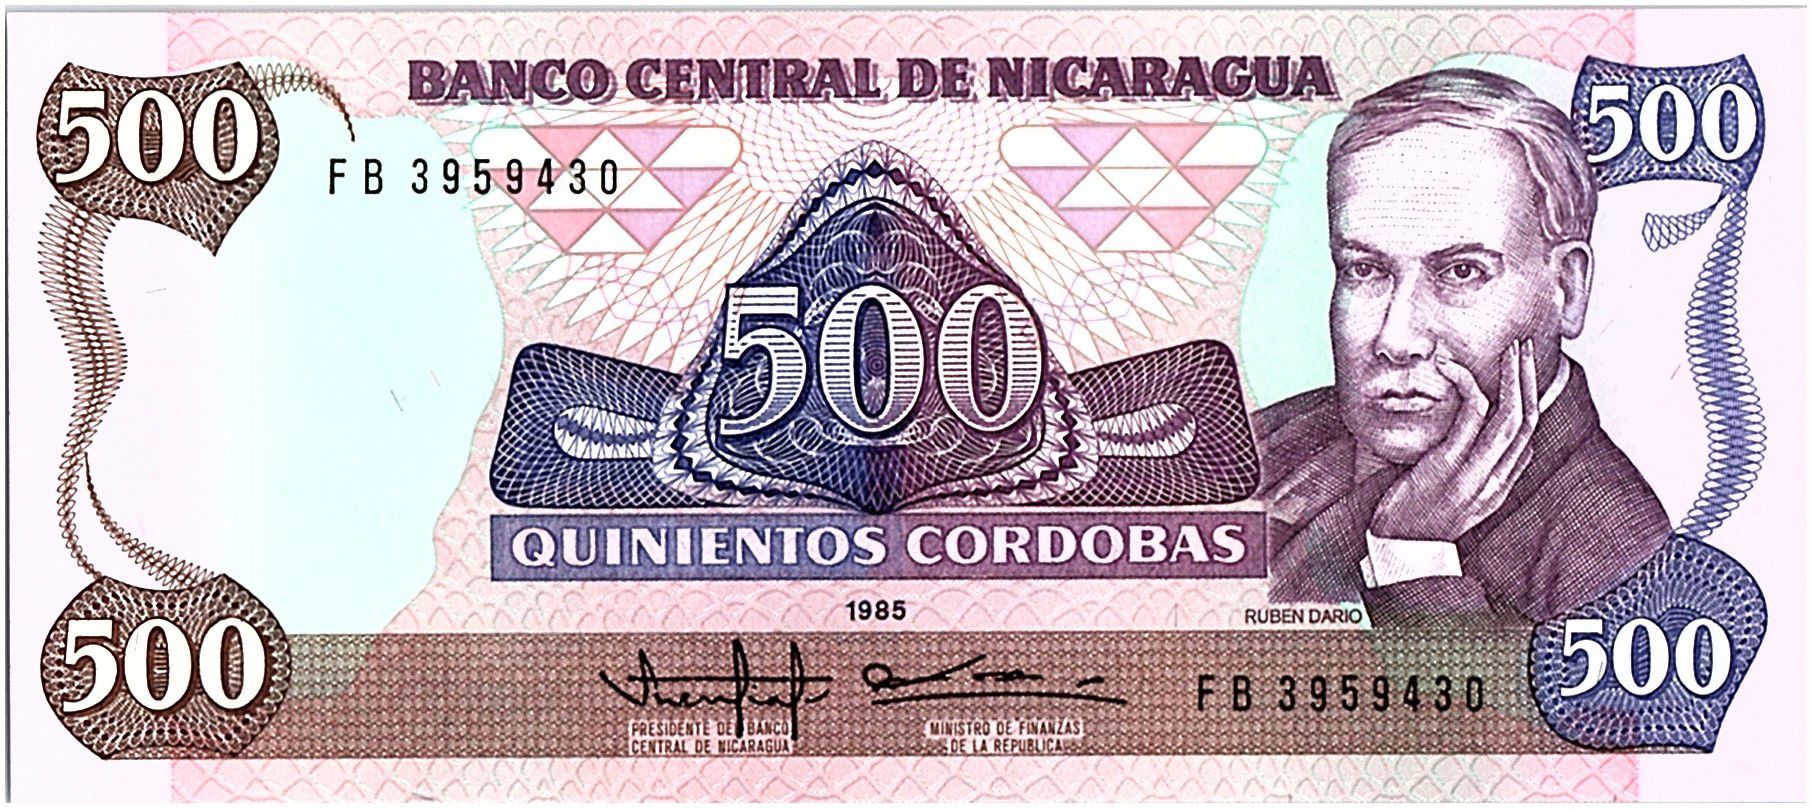 1988 - - RUBEN DARIO Pick- 155a Details about   SCARCE NICARAGUA UNC NOTE: 500 CORDOBAS 1985 